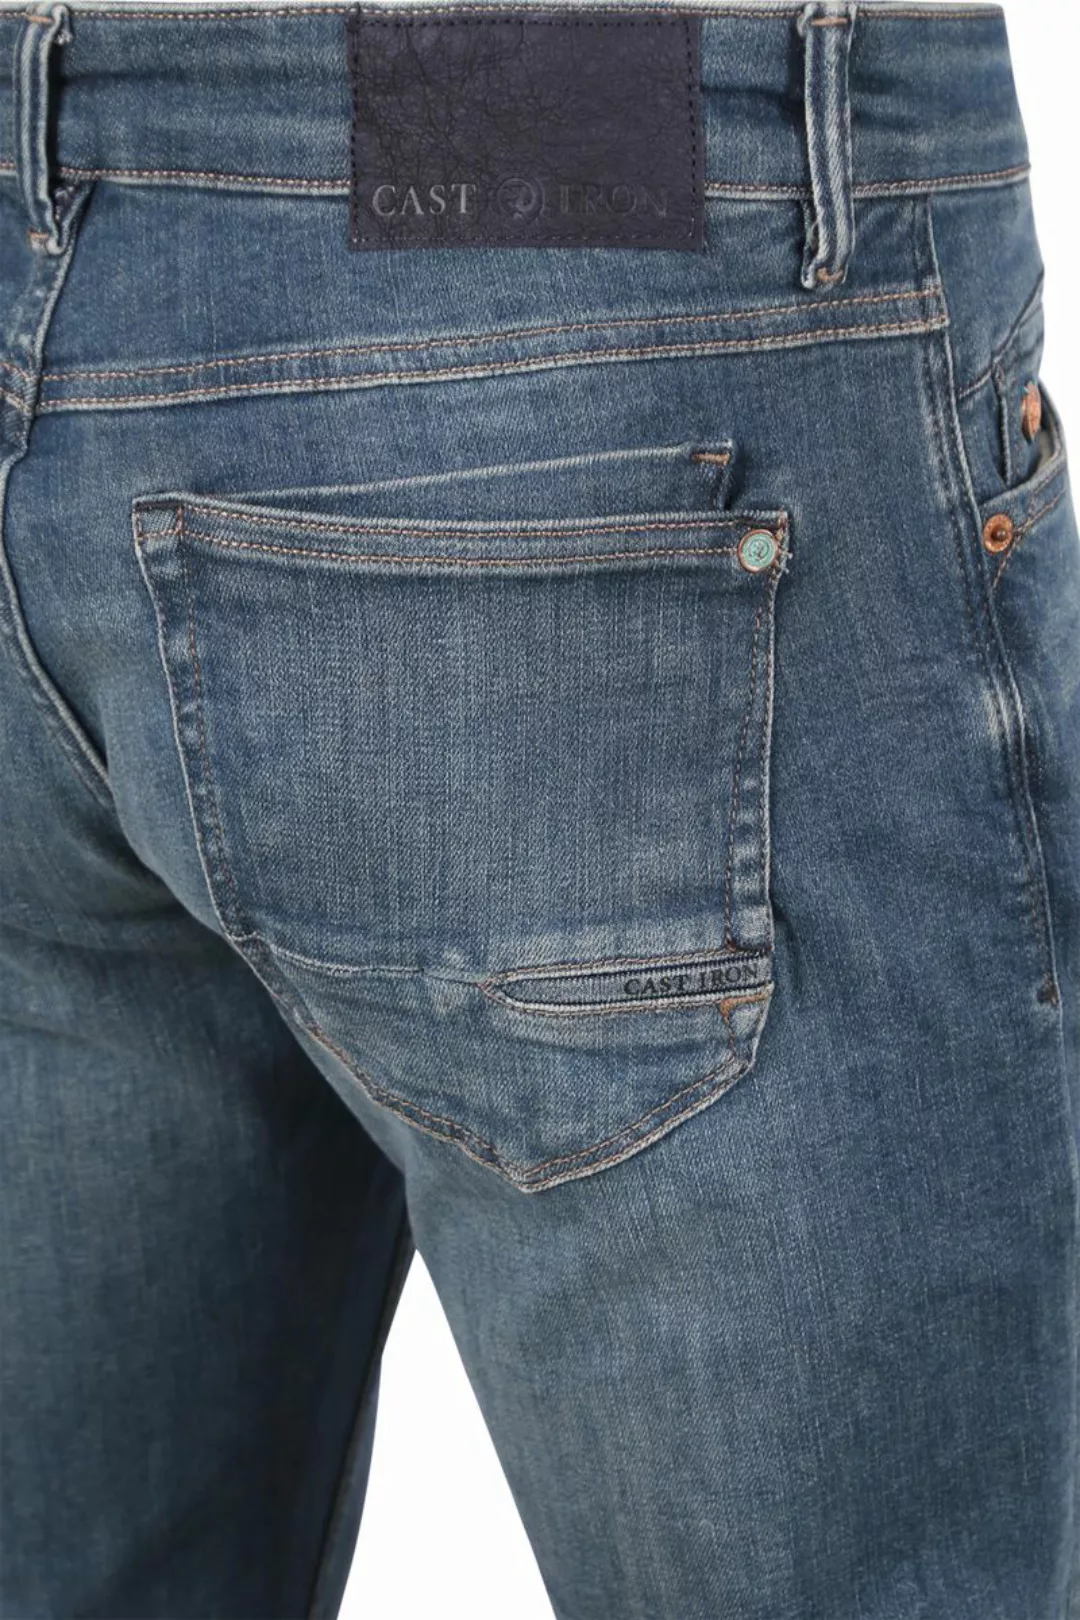 Cast Iron Shiftback Jeans Blau NBD - Größe W 33 - L 32 günstig online kaufen